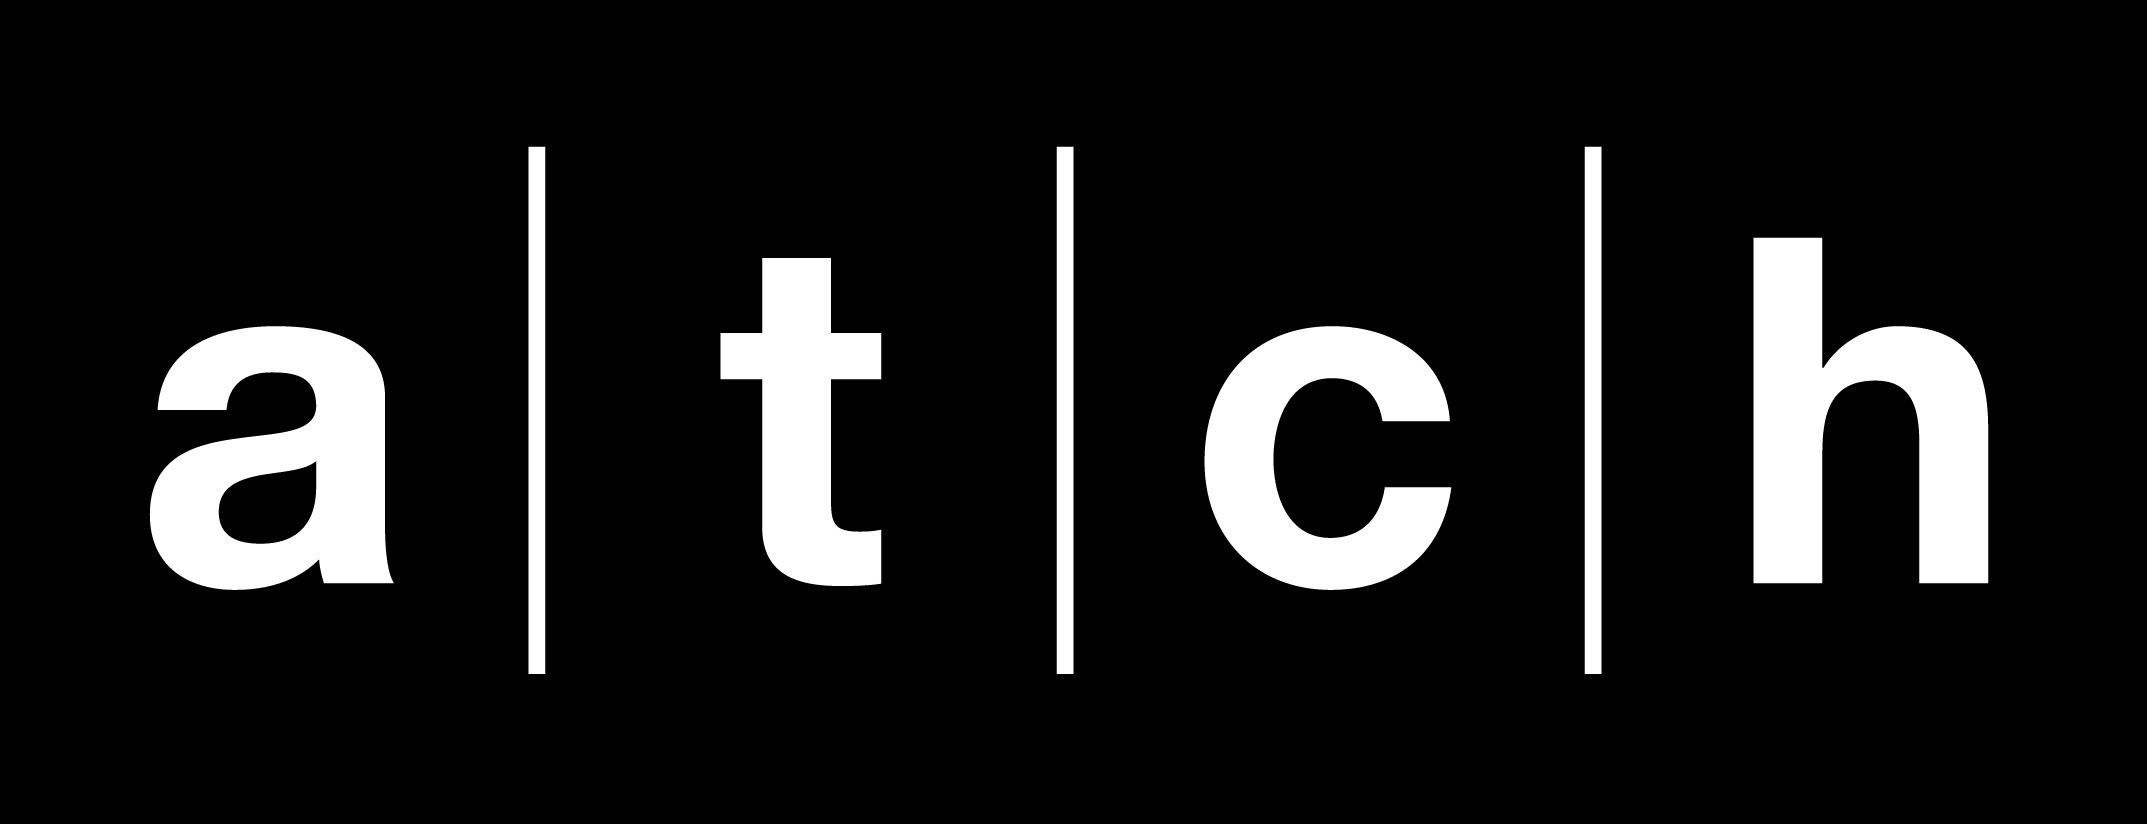 atch logo